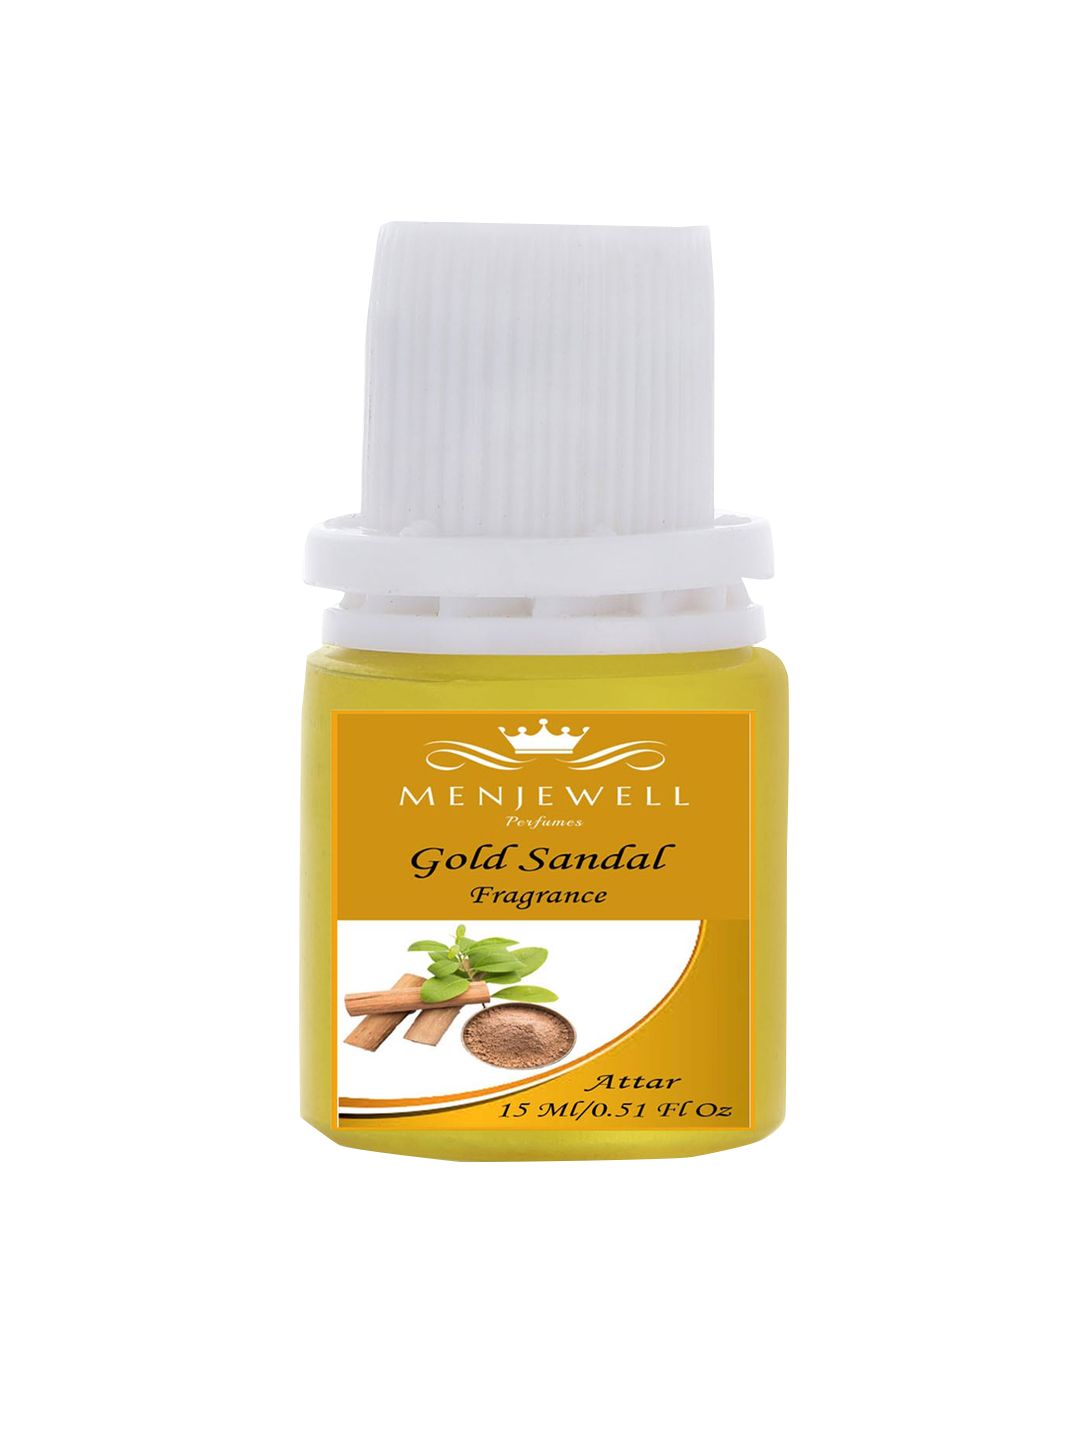 Menjewell Gold Sandal Fragrance Long Lasting Attar 15ml Price in India